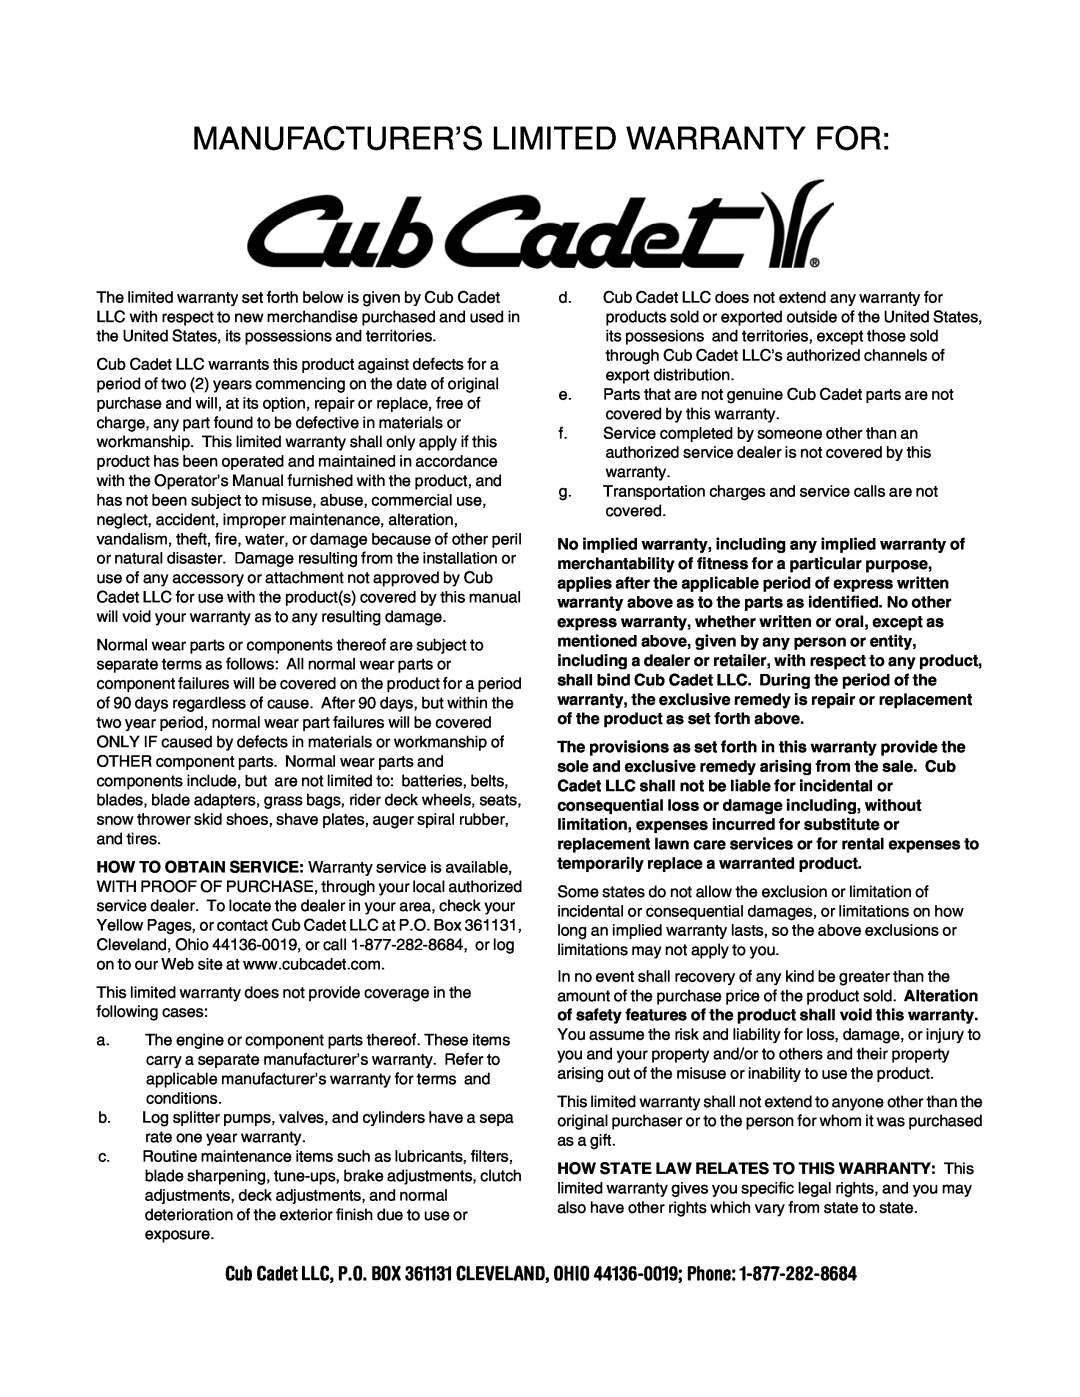 Cub Cadet 190-670-100 Cub Cadet LLC, P.O. BOX 361131 CLEVELAND, OHIO 44136-0019 Phone, Manufacturer’S Limited Warranty For 